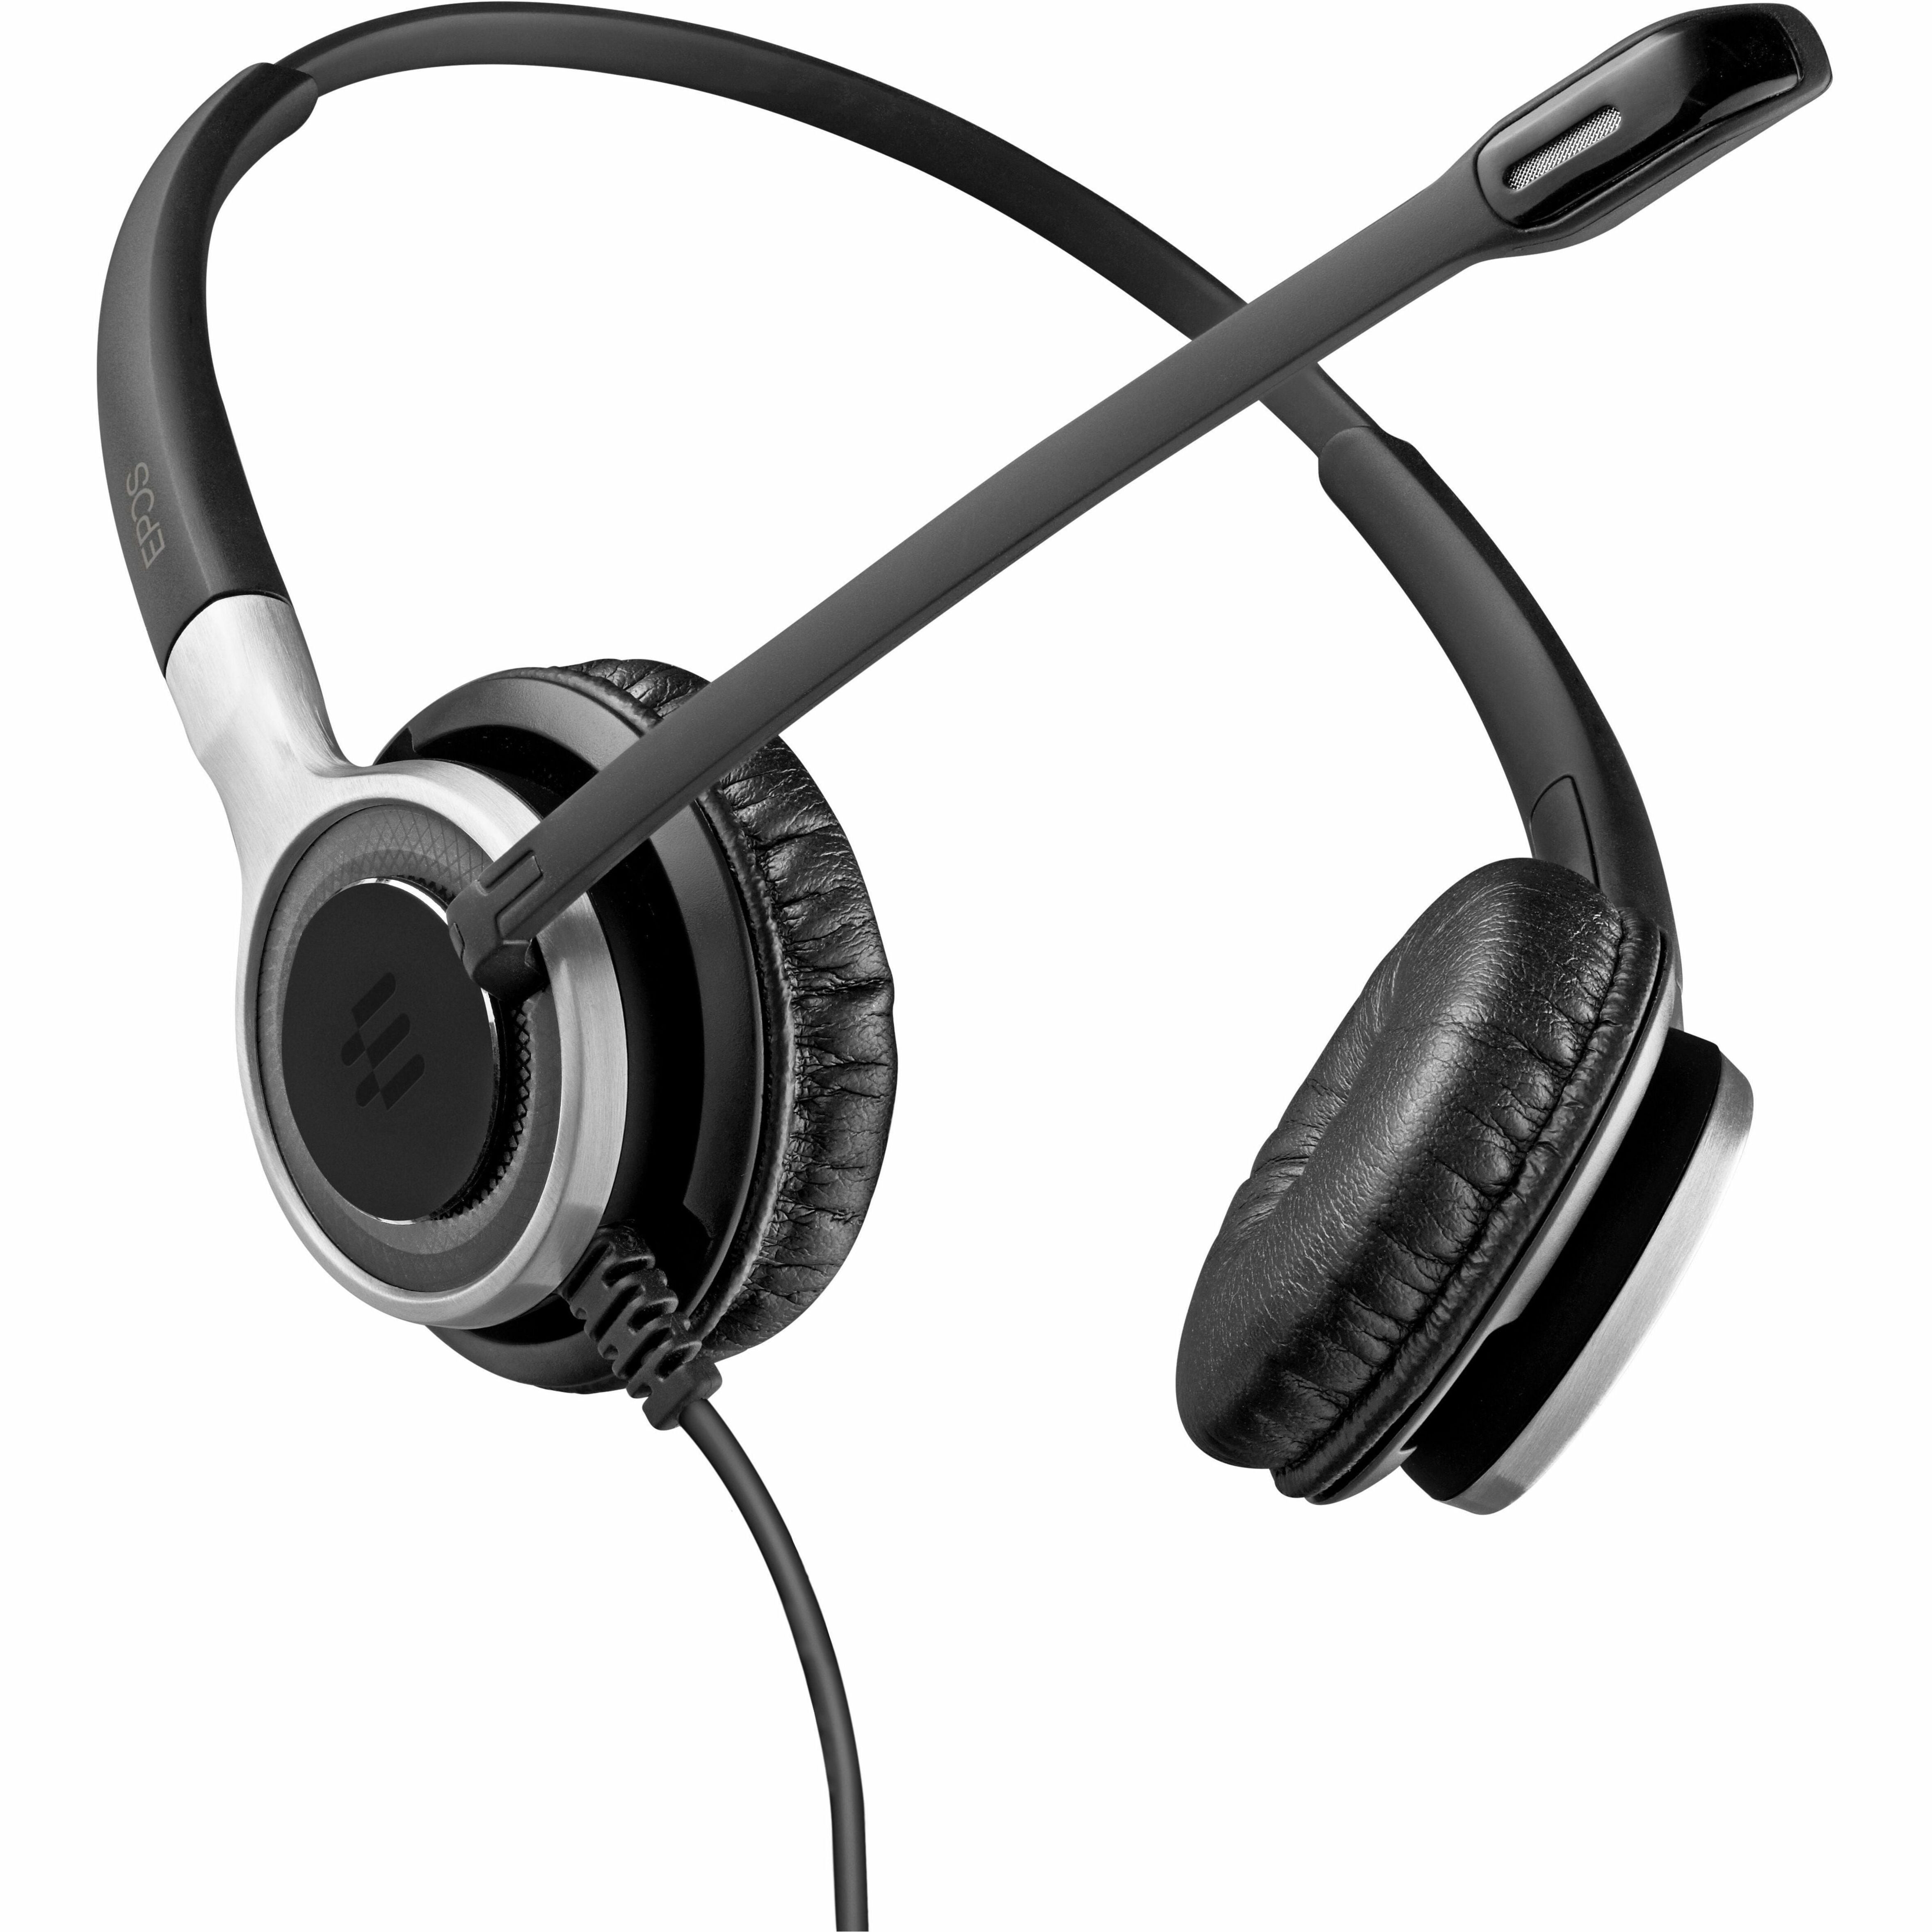 EPOS | SENNHEISER EPOS IMPACT SC 665 USB On-Ear Headset - Noise Canceling, Black/Silver [Discontinued]